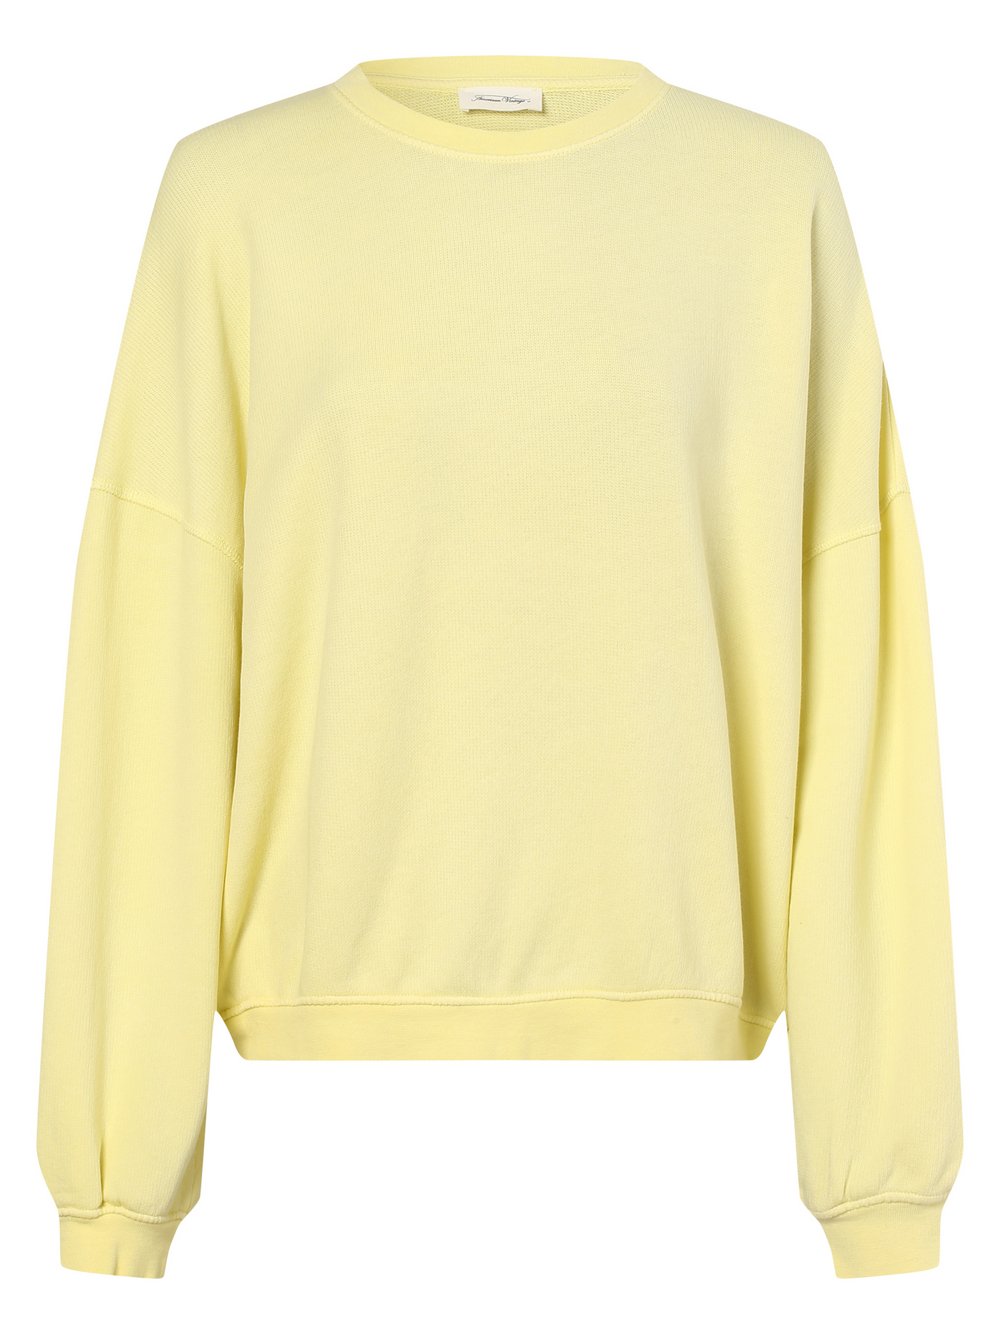 American vintage - Damska bluza nierozpinana – Hapylife, żółty